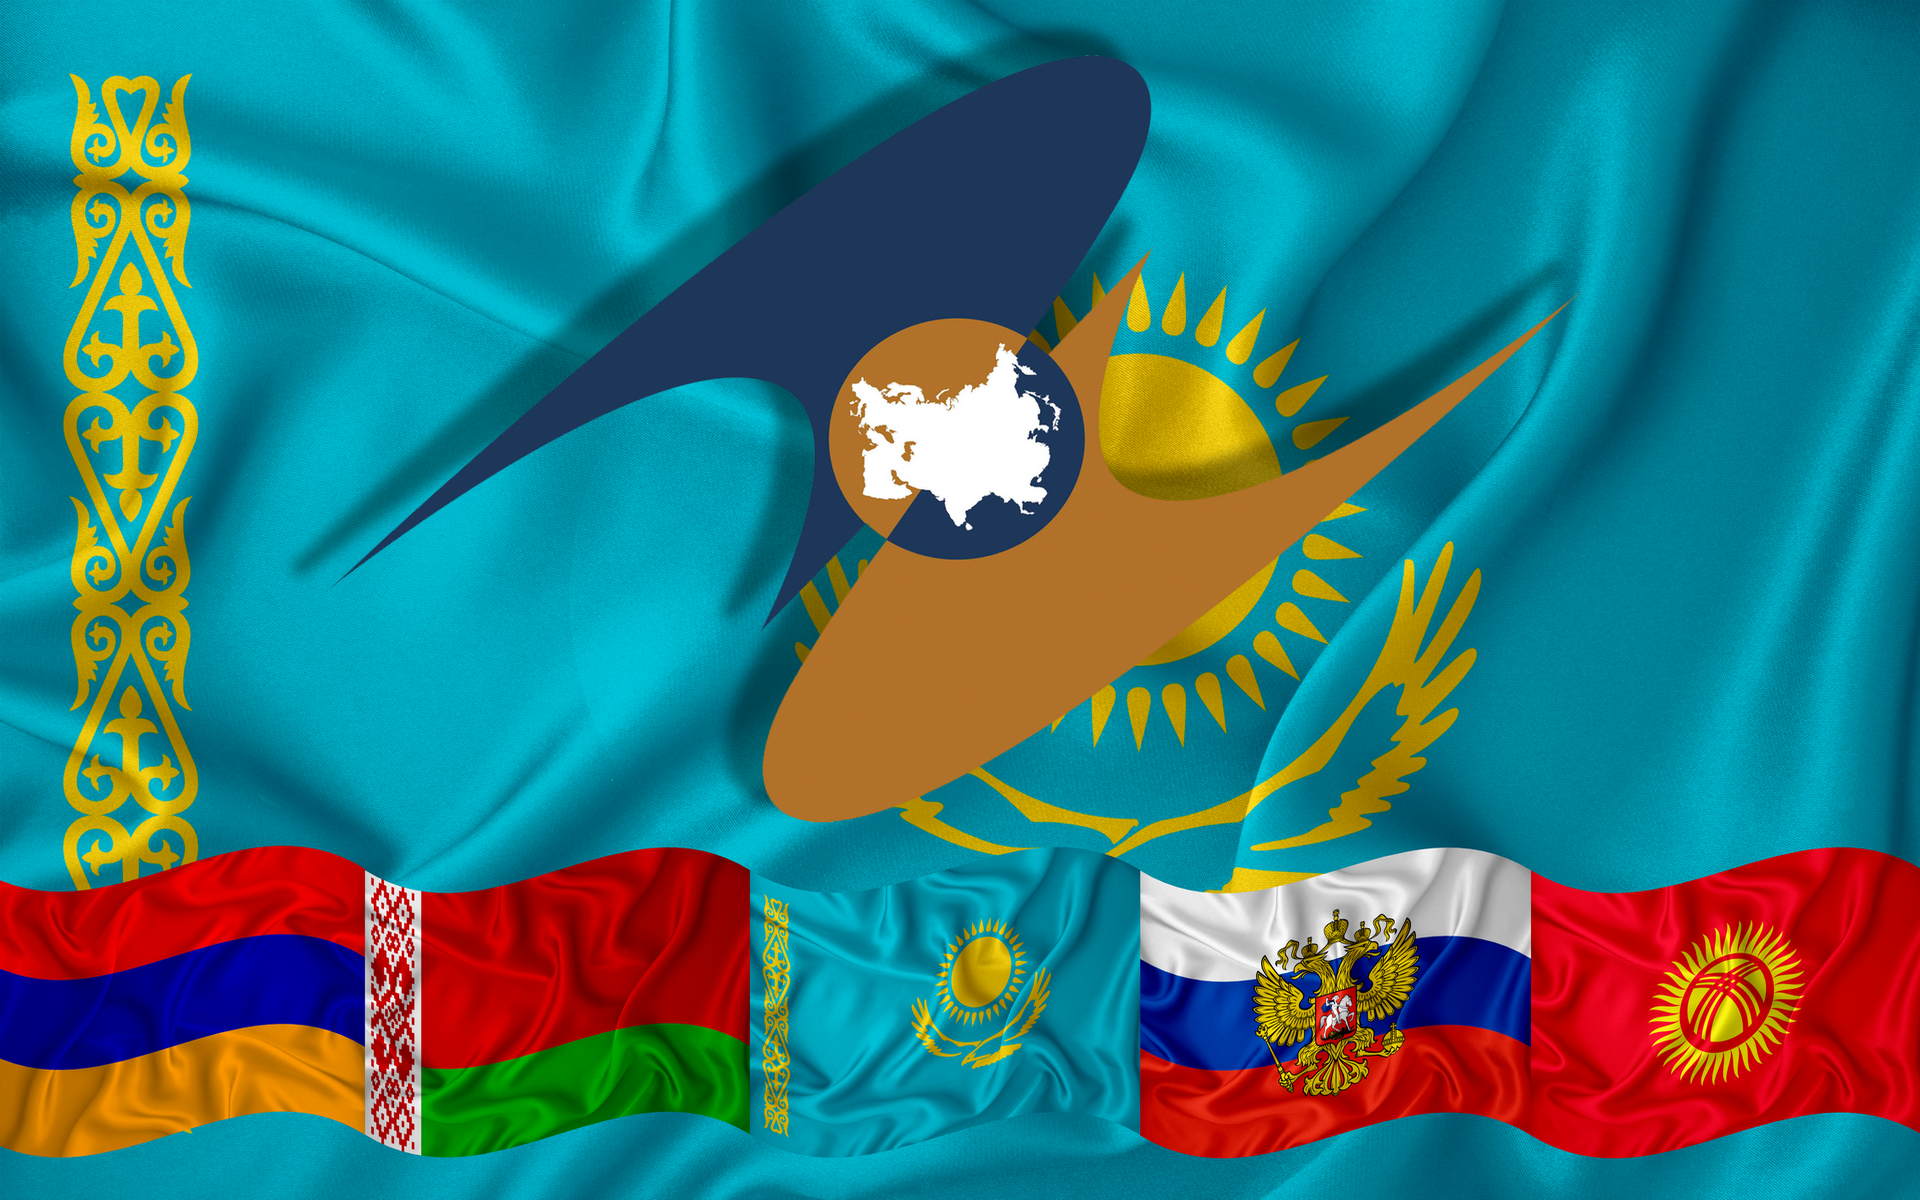 Eurasian Economic Union (EAEU)